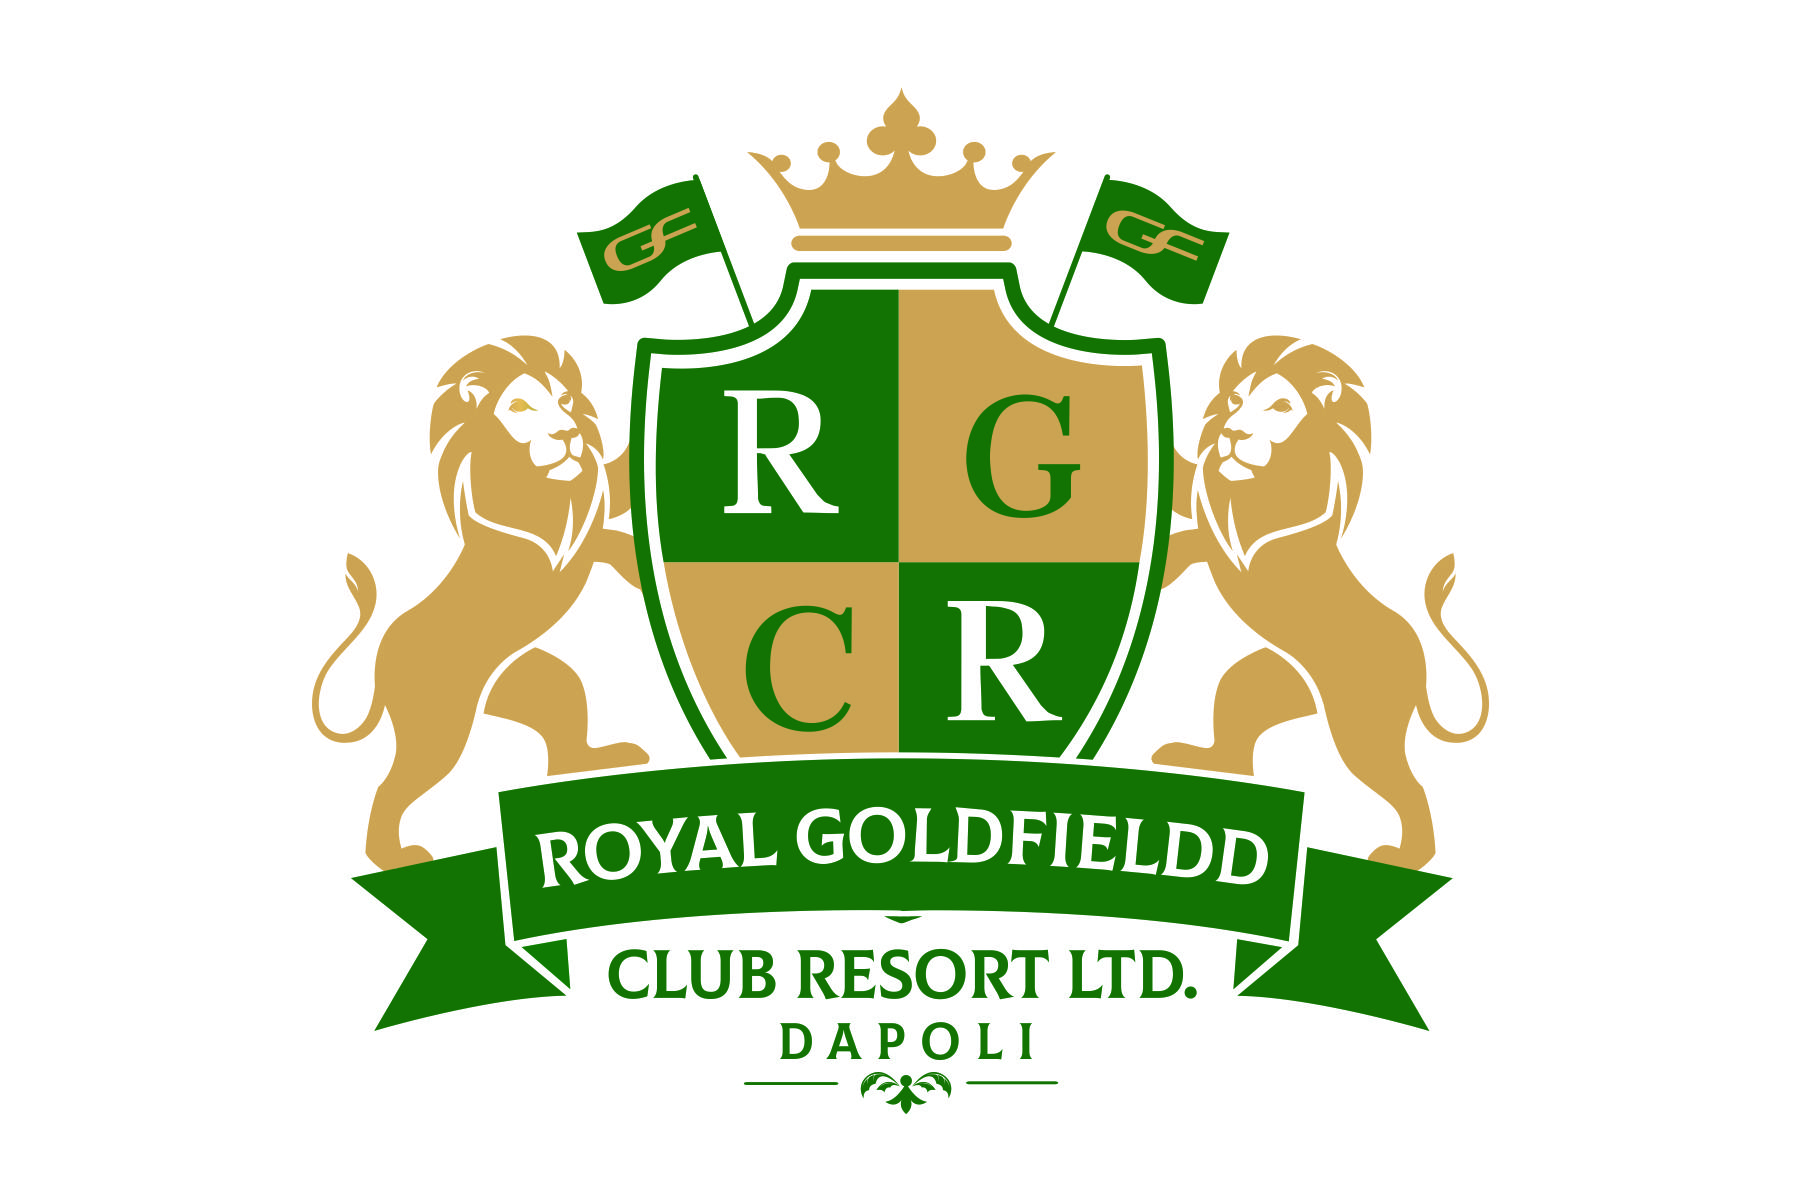 Royal Goldfieldd Club Resort Ltd.